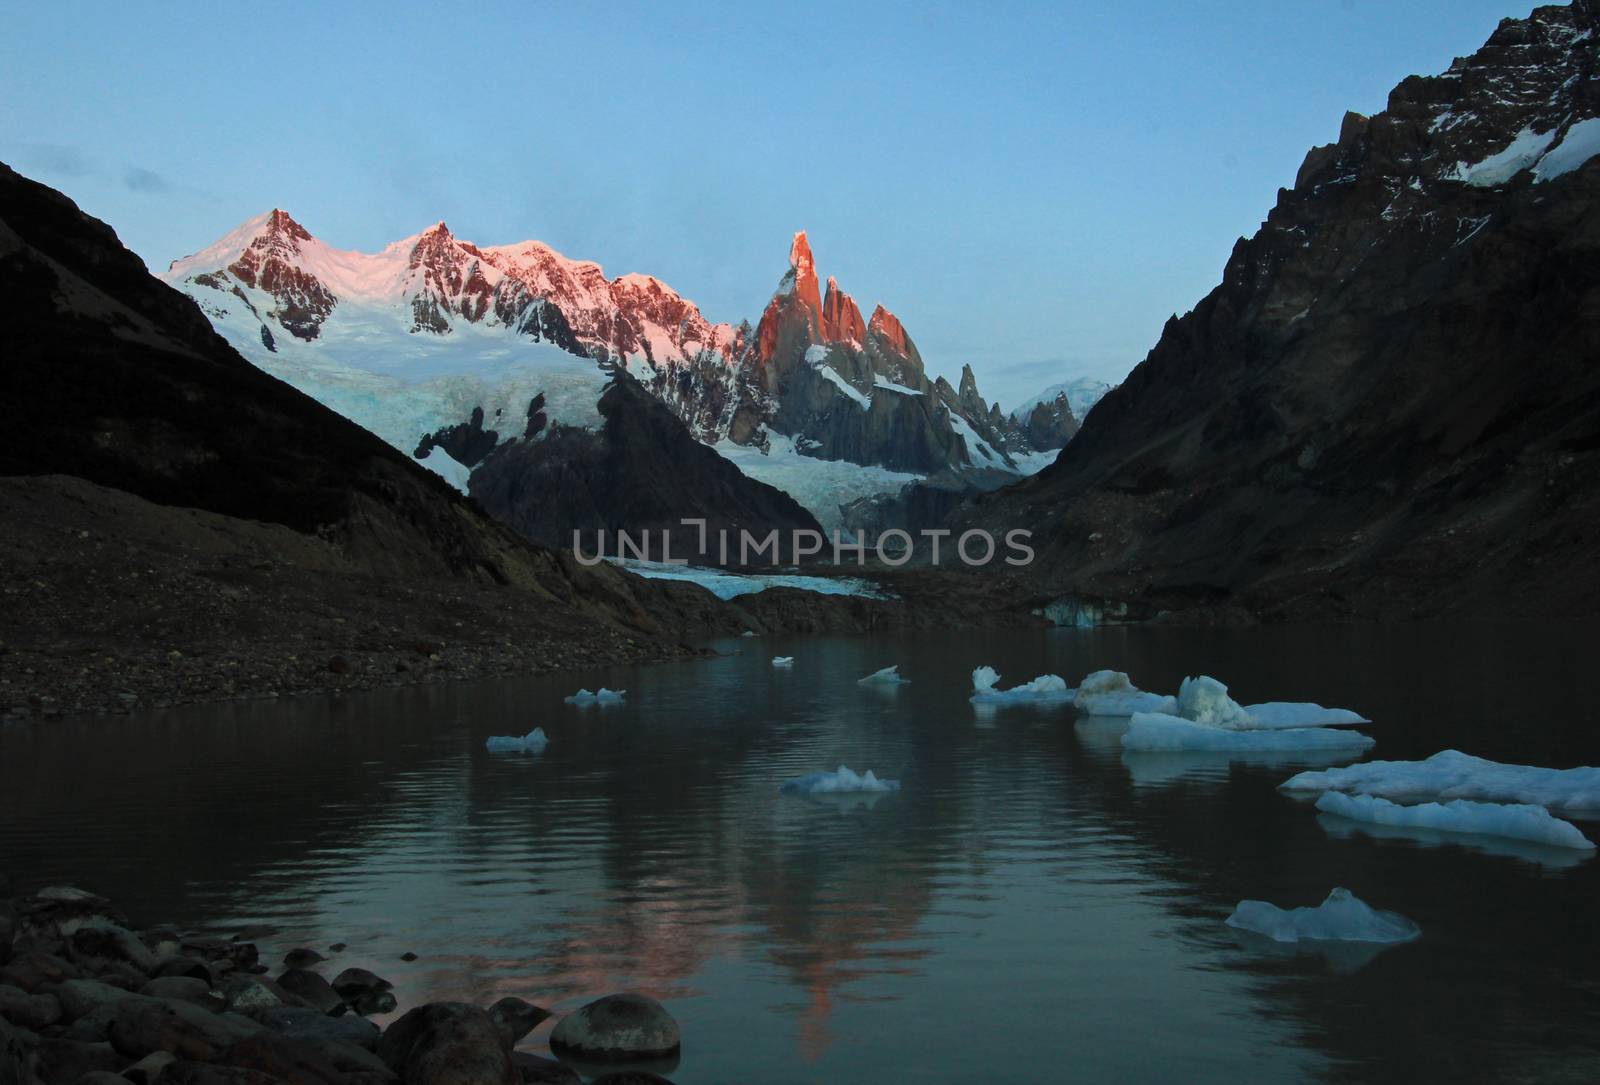 Reflection of Cerro Torre in Laguna Torre, Patagonia, Argentina, South America